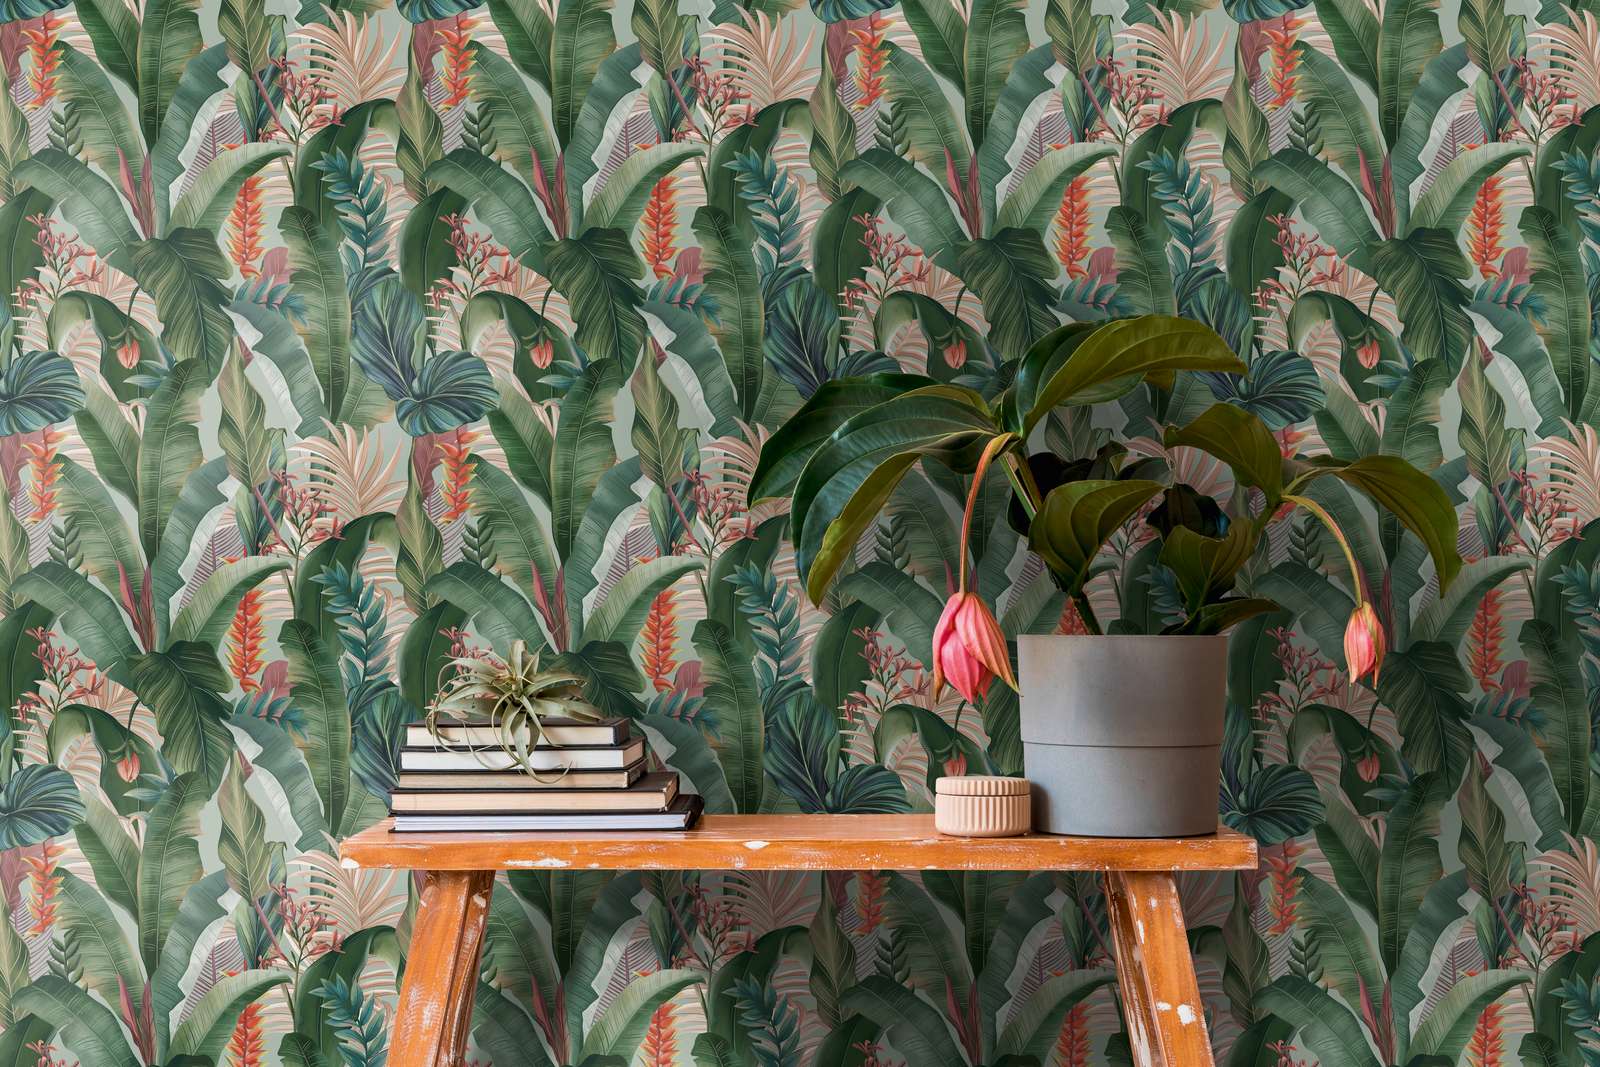             Florale Dschungeltapete mit Palmenblättern & Blüten strukturiert matt – Grün, Rosa, Rot
        